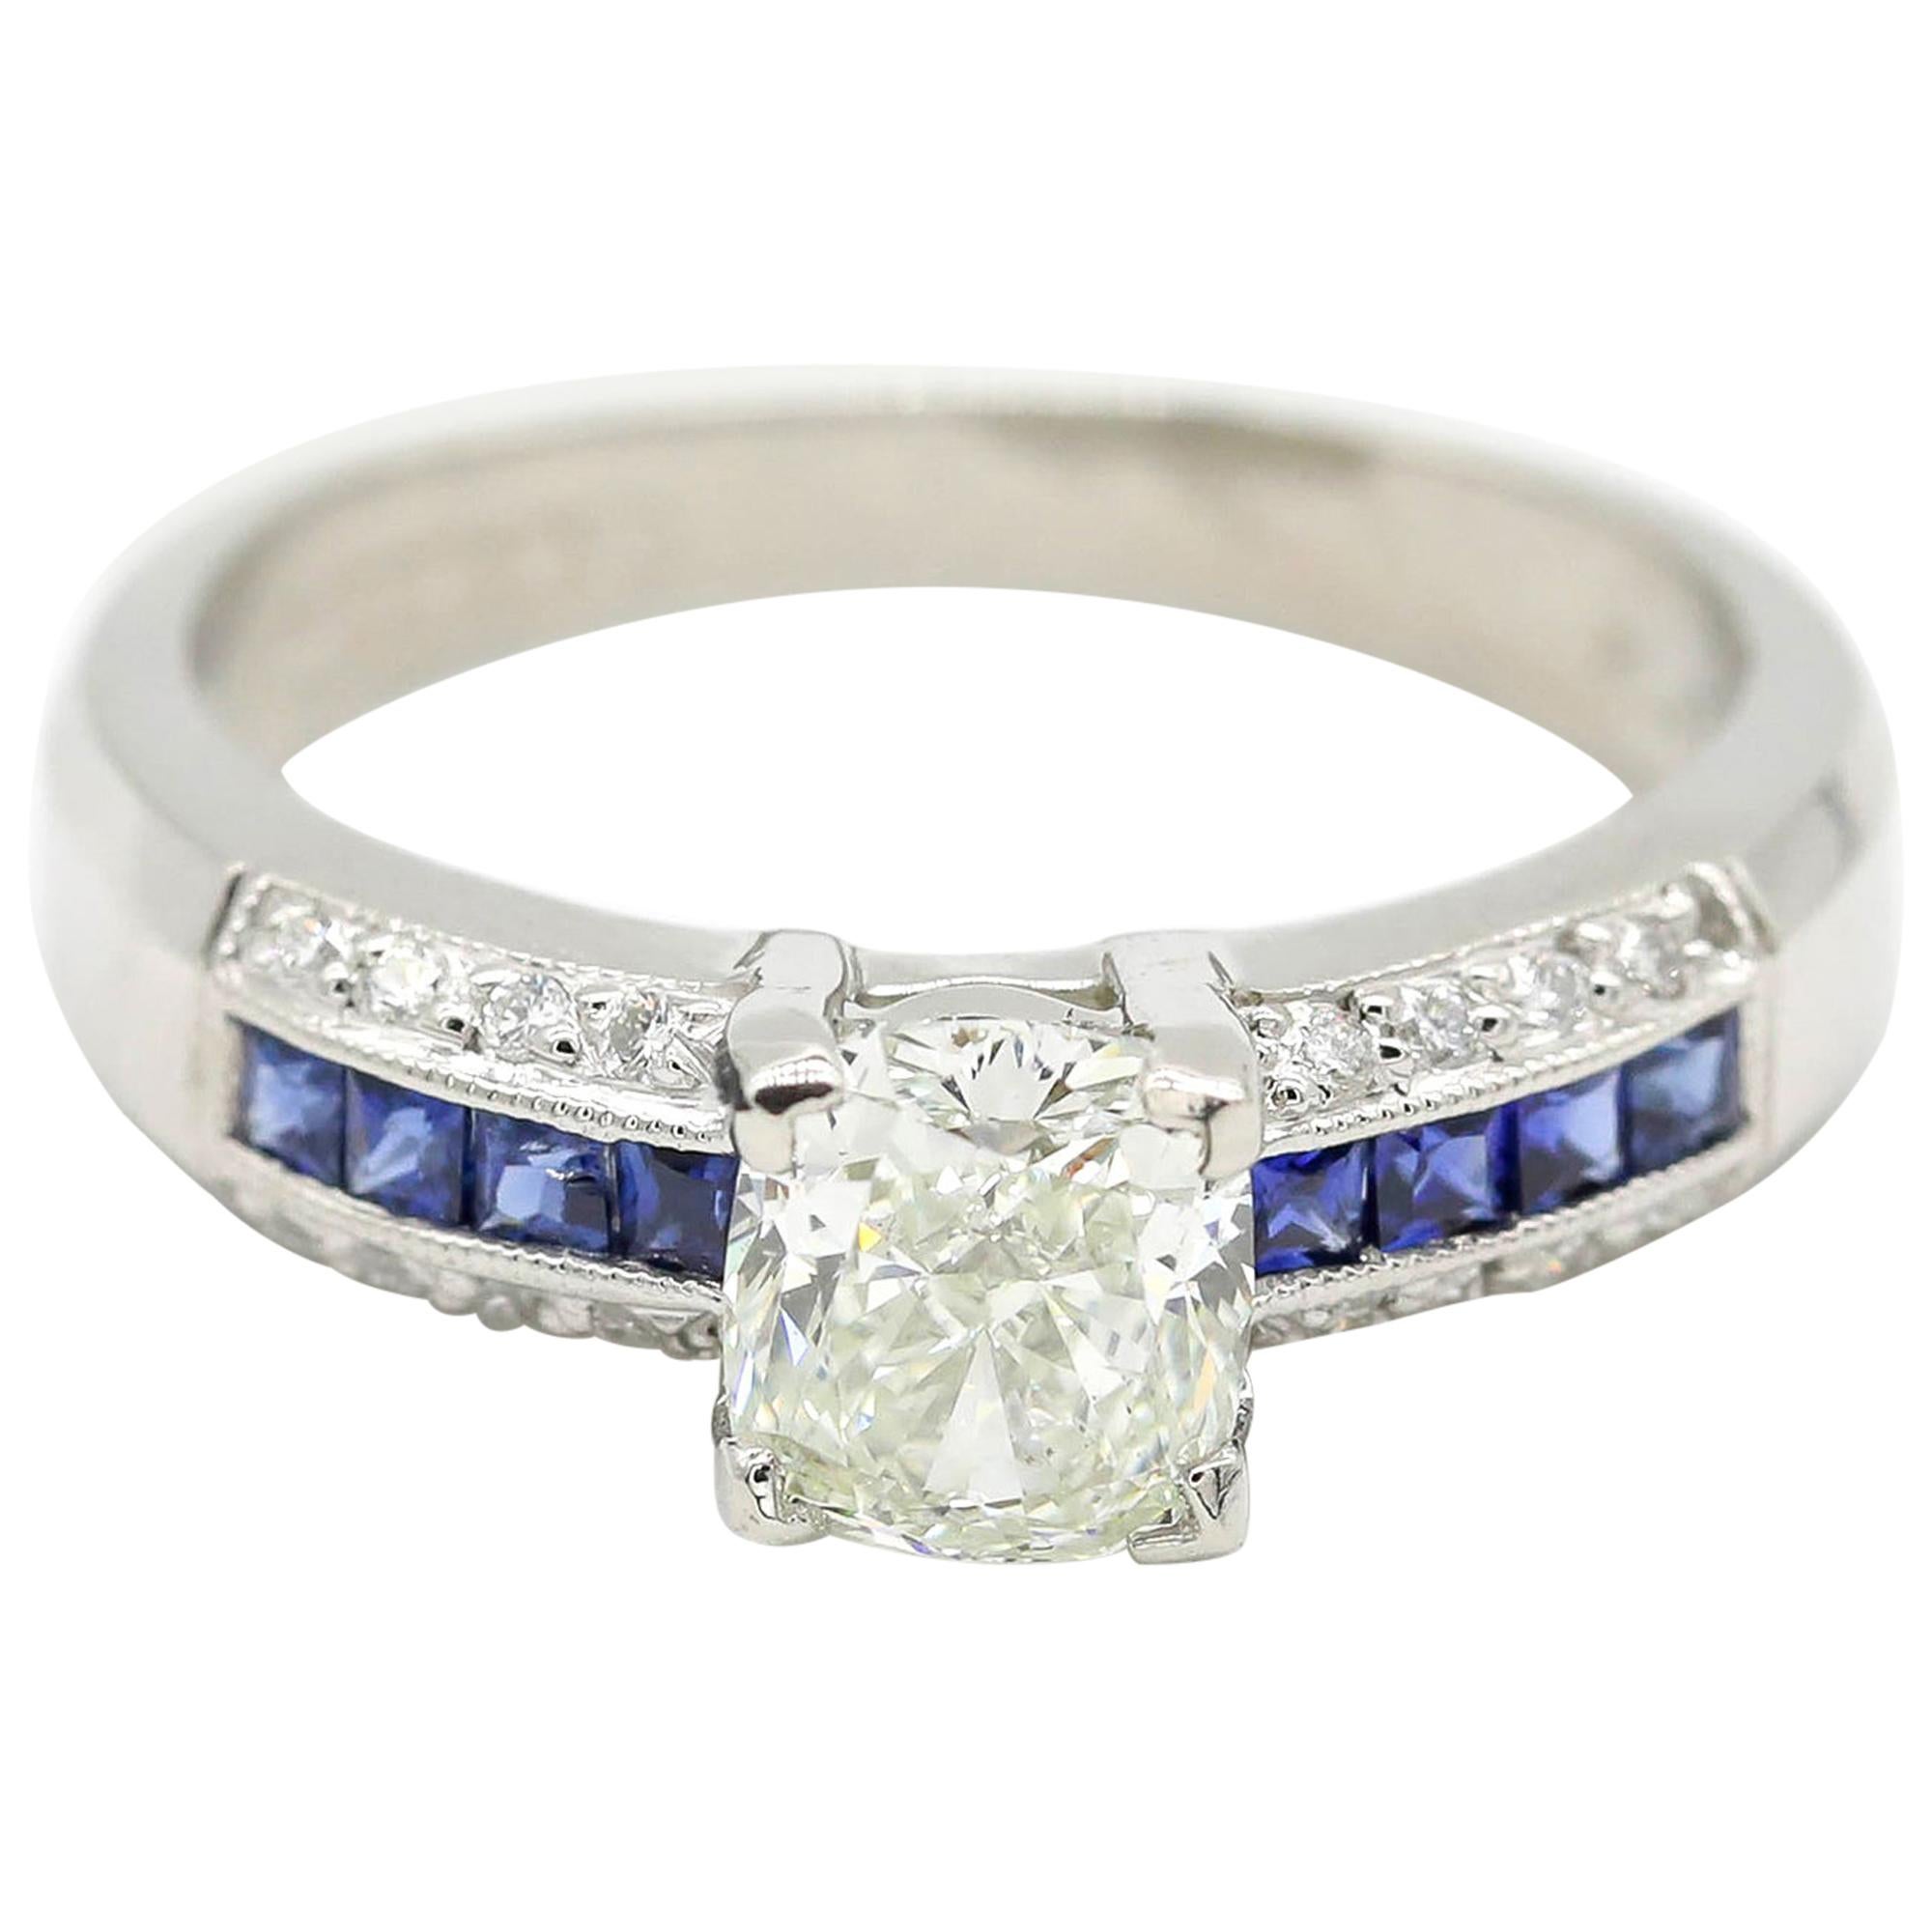 Blue Sapphire Princess Cut 1.7 Carat Diamond Ring Platinum by Tacori